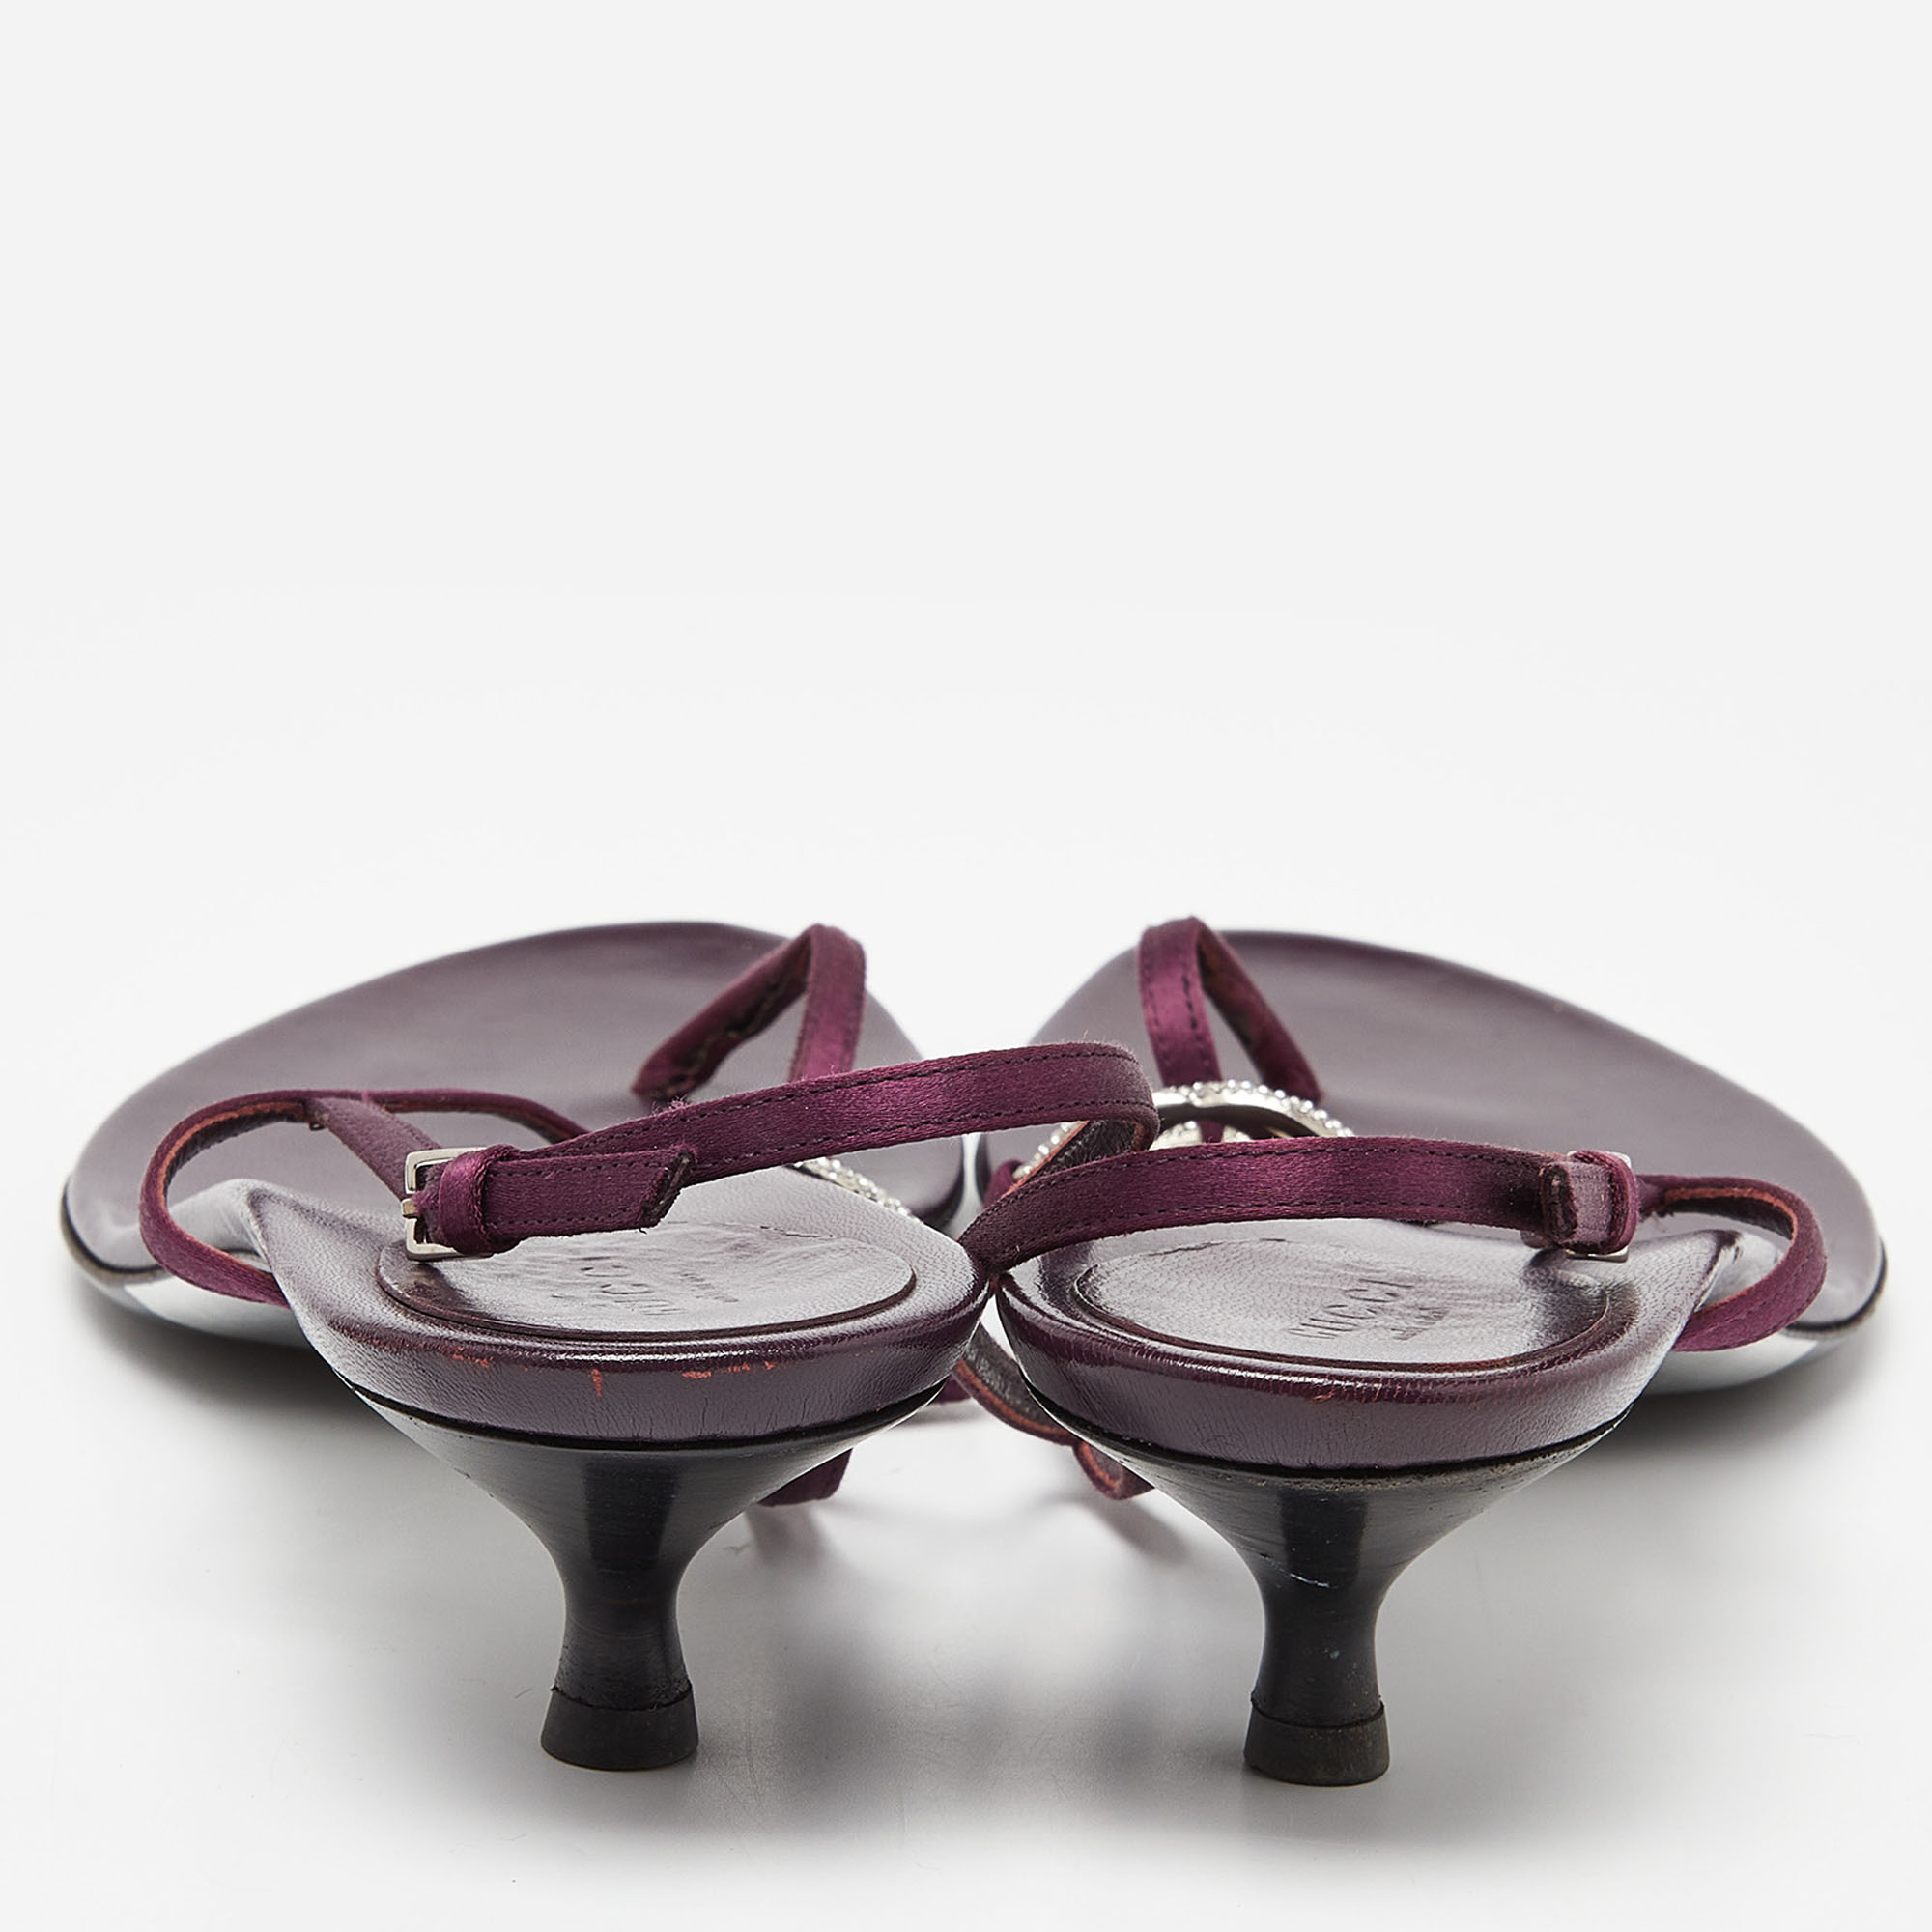 Gucci Purple Satin Crystal Embellished Interlocking G Thong Sandals Size 41.5